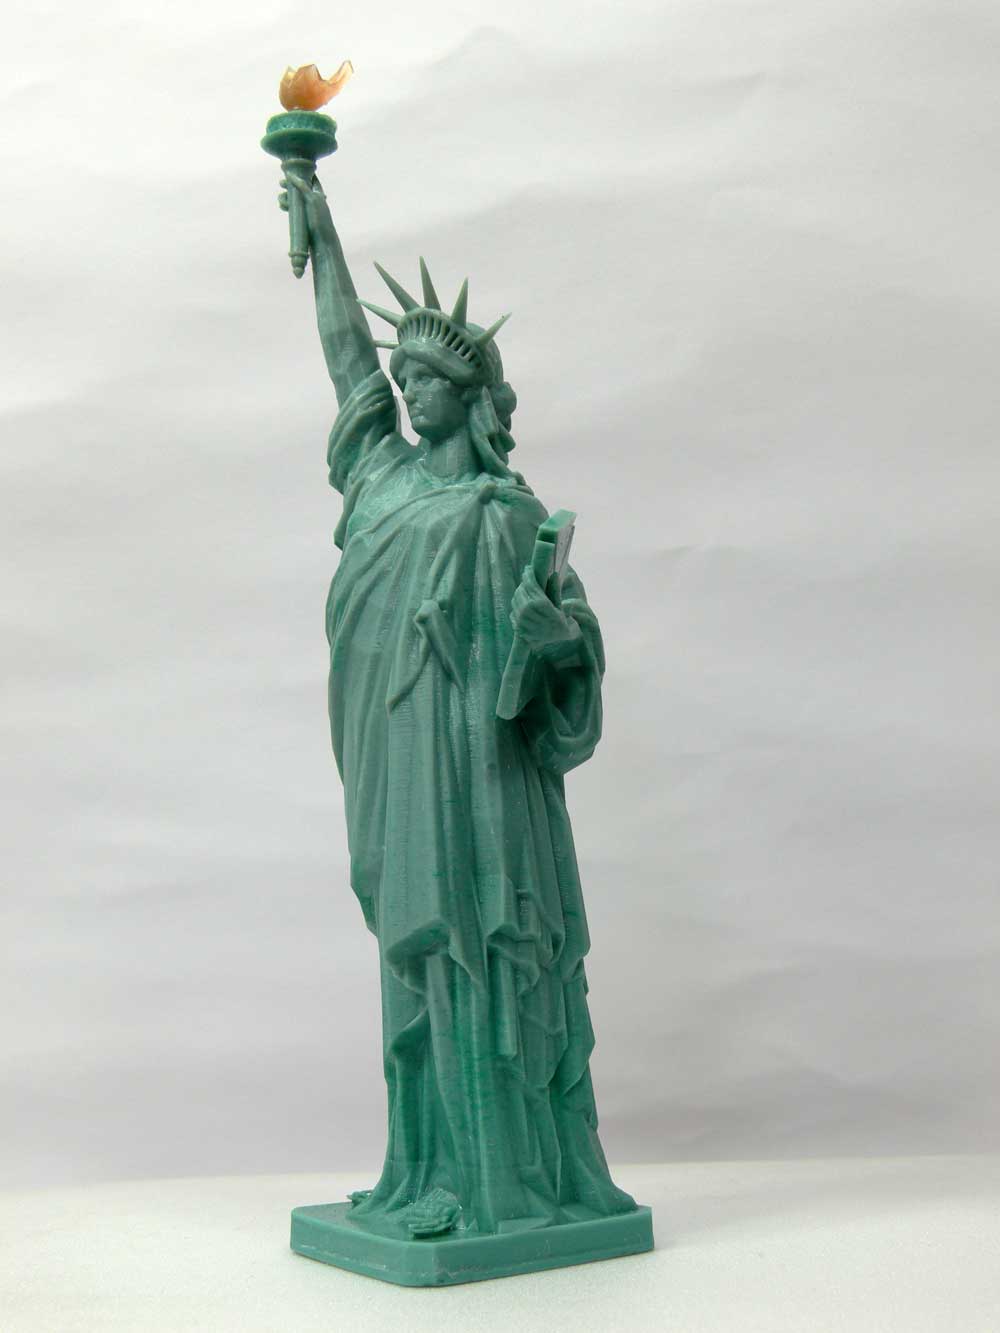 Statue of Liberty with Kudo3D Titan 1 SLA 3D printer